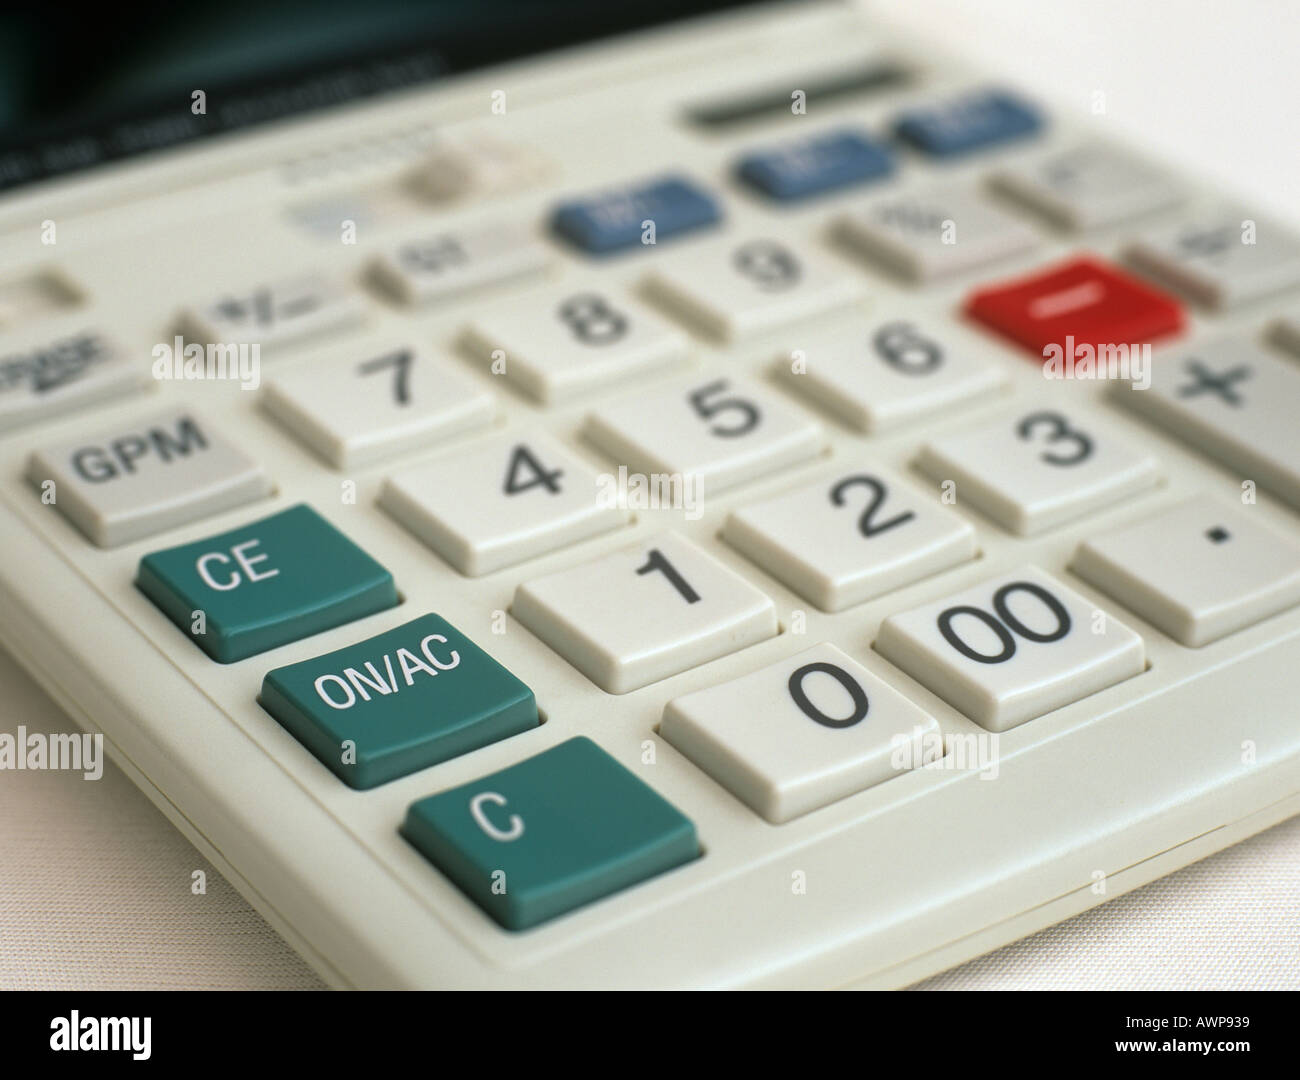 Calculator in close up focused on green ON AC key Studio Still life Stock Photo